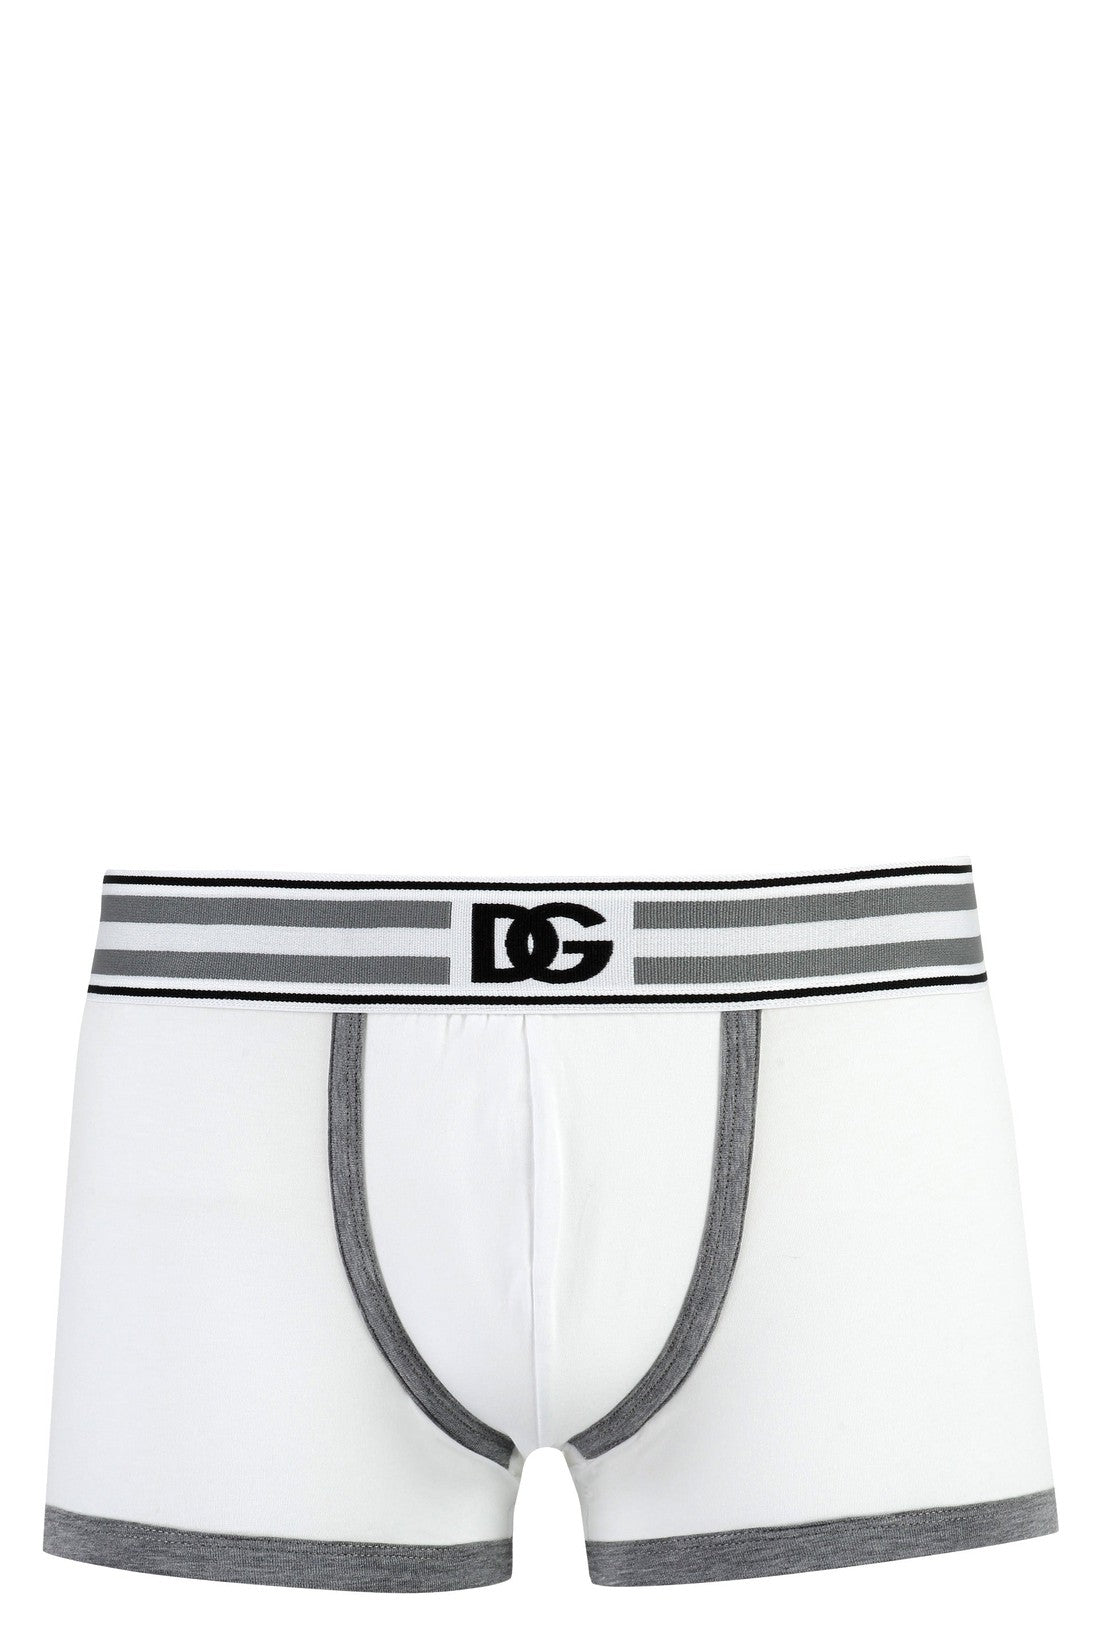 Dolce & Gabbana-OUTLET-SALE-Logoed elastic band cotton trunks-ARCHIVIST